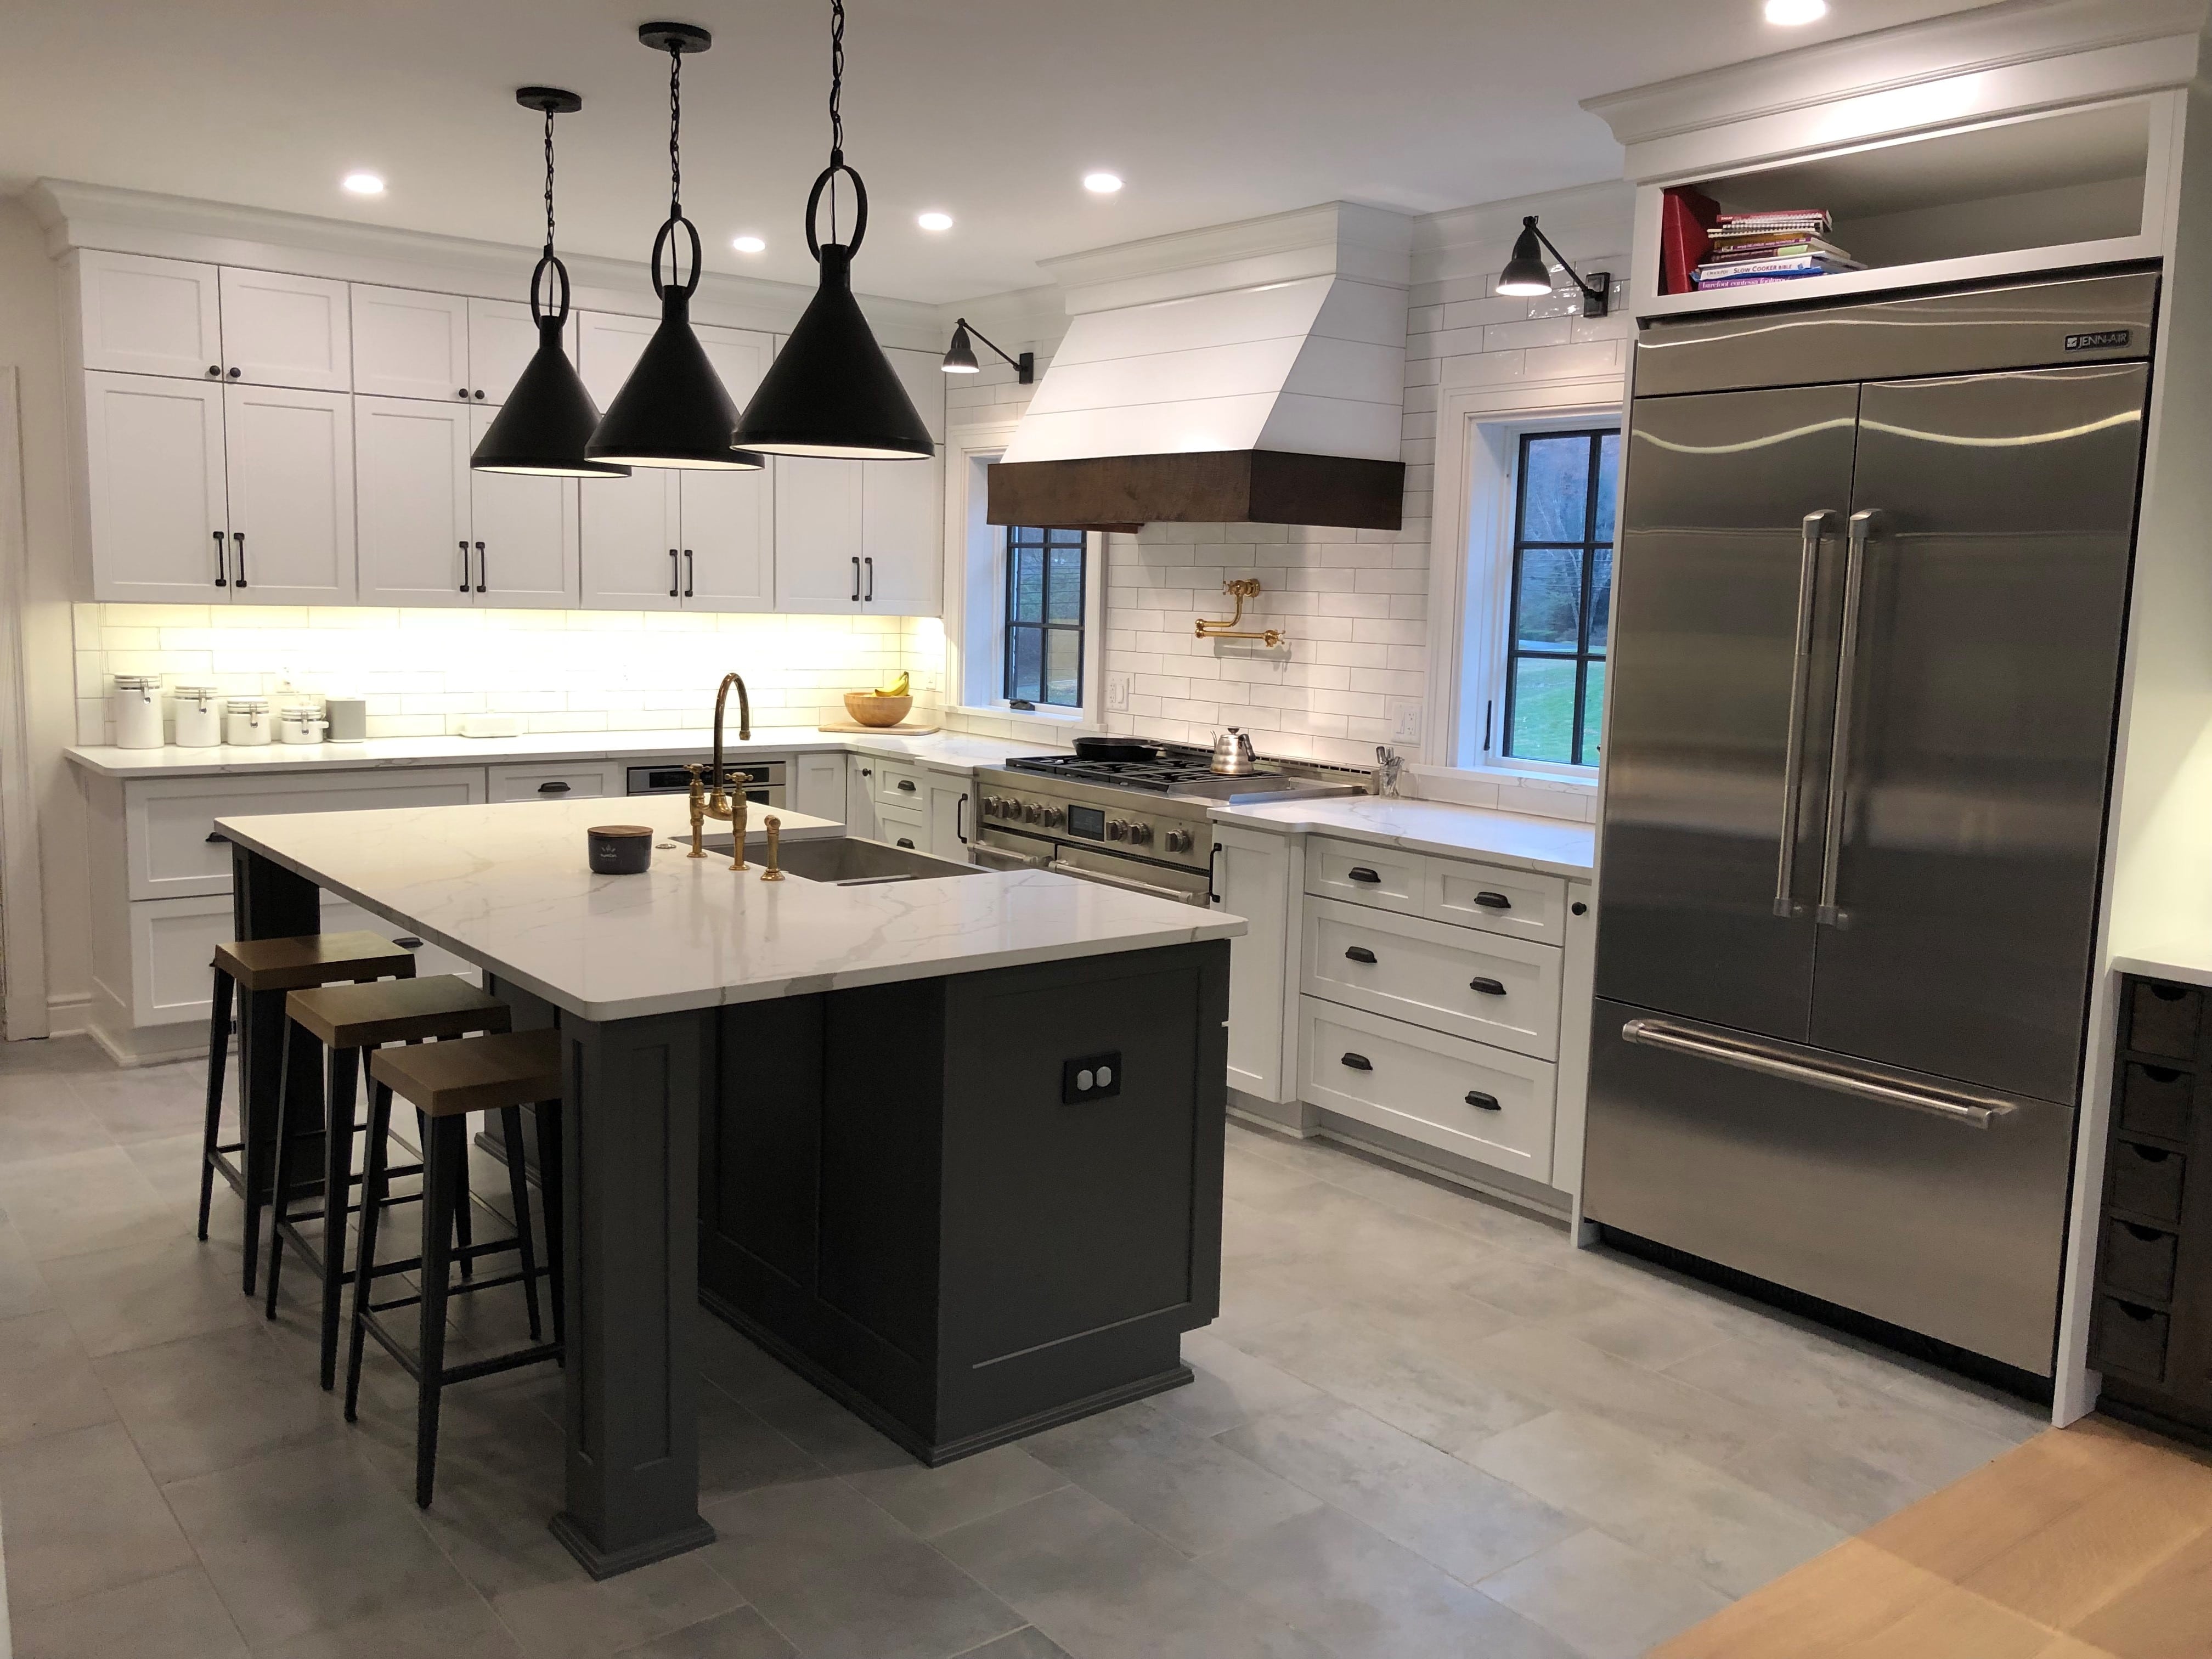 New 2021 Kitchen Design Trends BC Stone